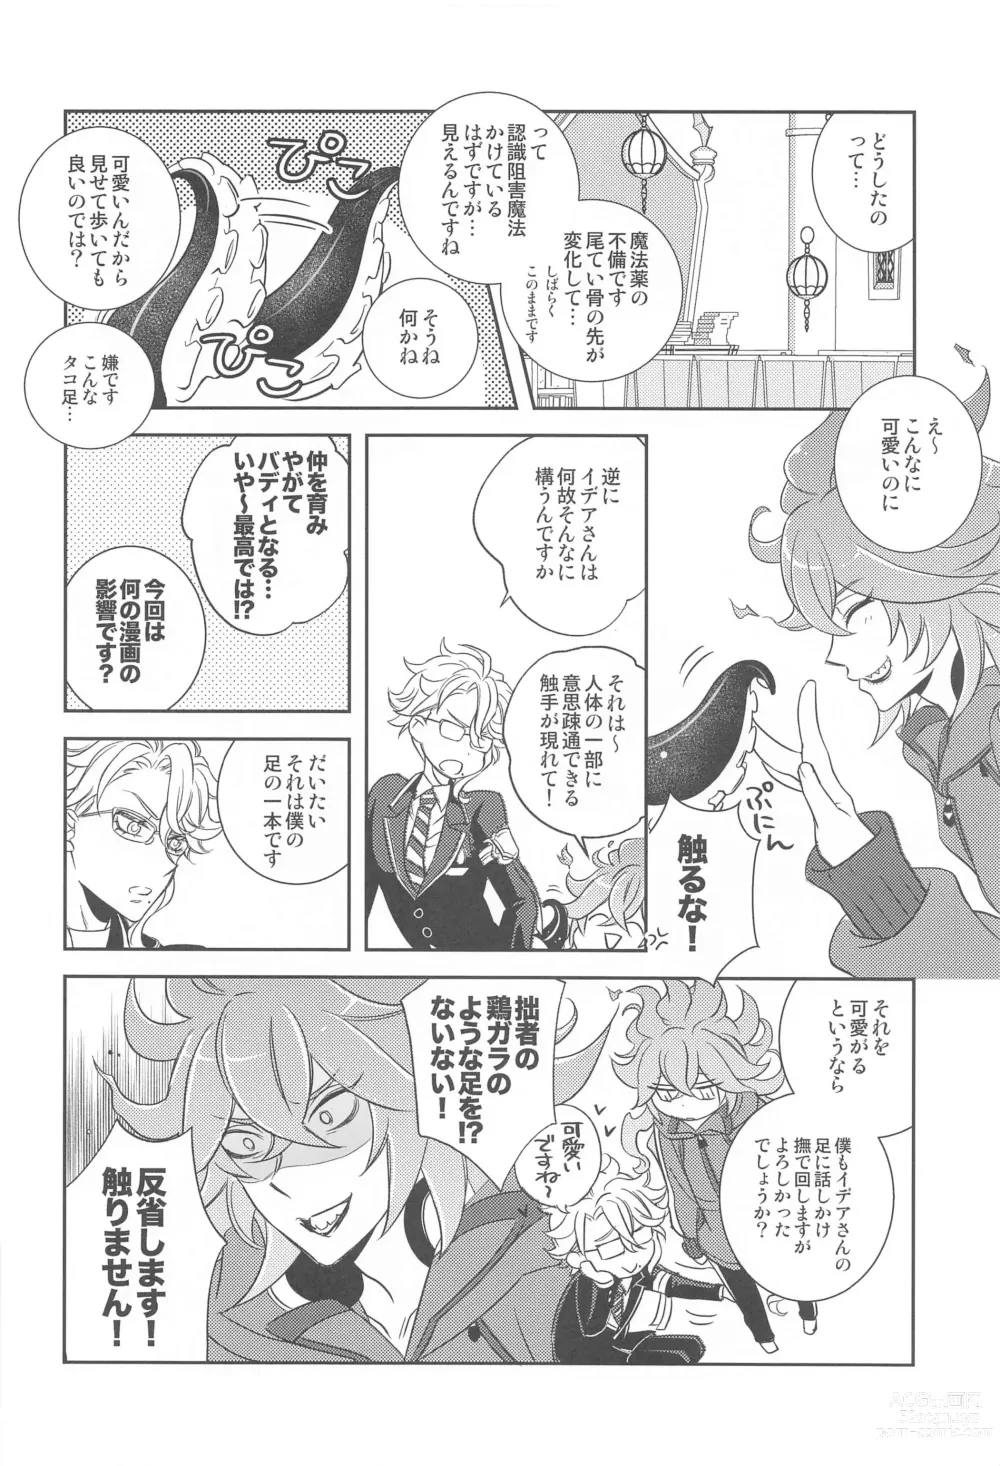 Page 5 of doujinshi Tail!